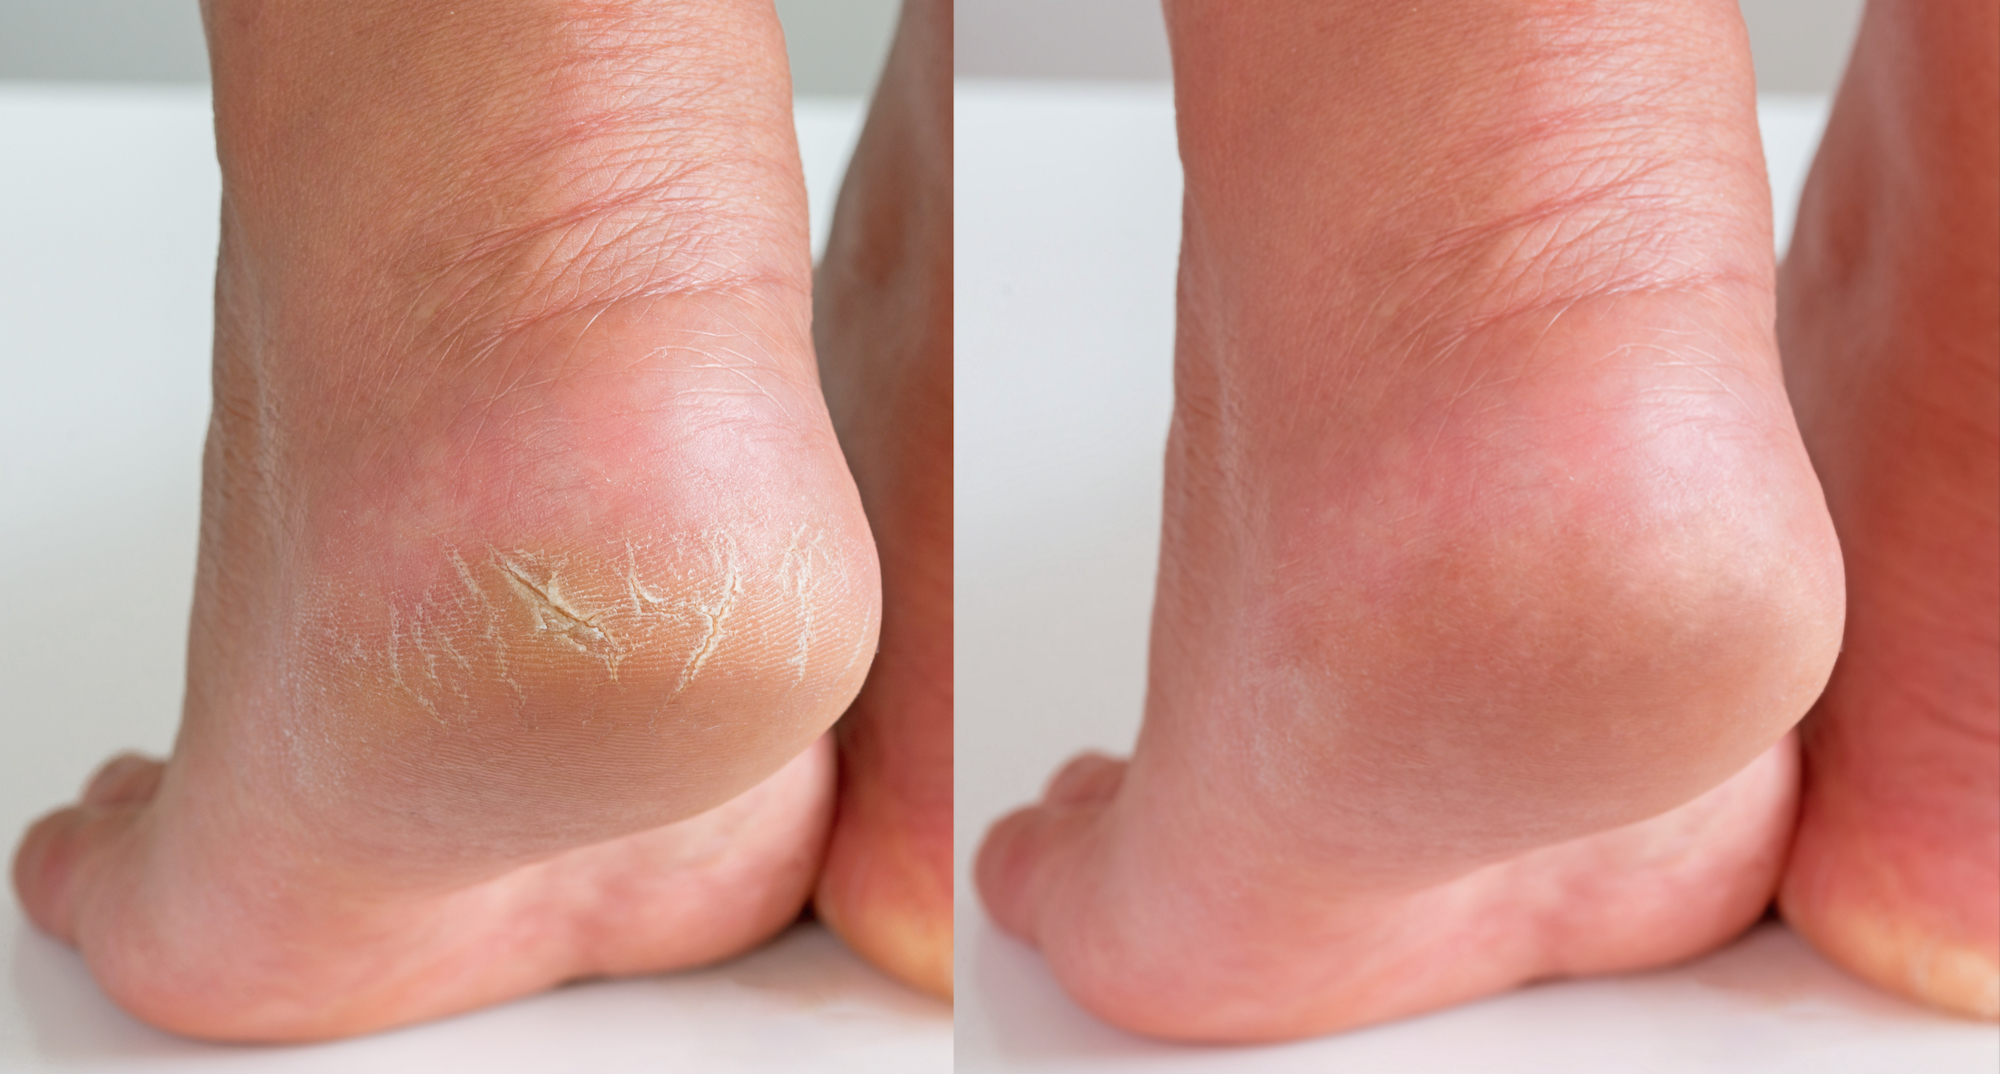 Kerasal Intensive Foot Repair, Skin Healing Ointment for Cracked Heels and  Dry Feet, 1 Oz